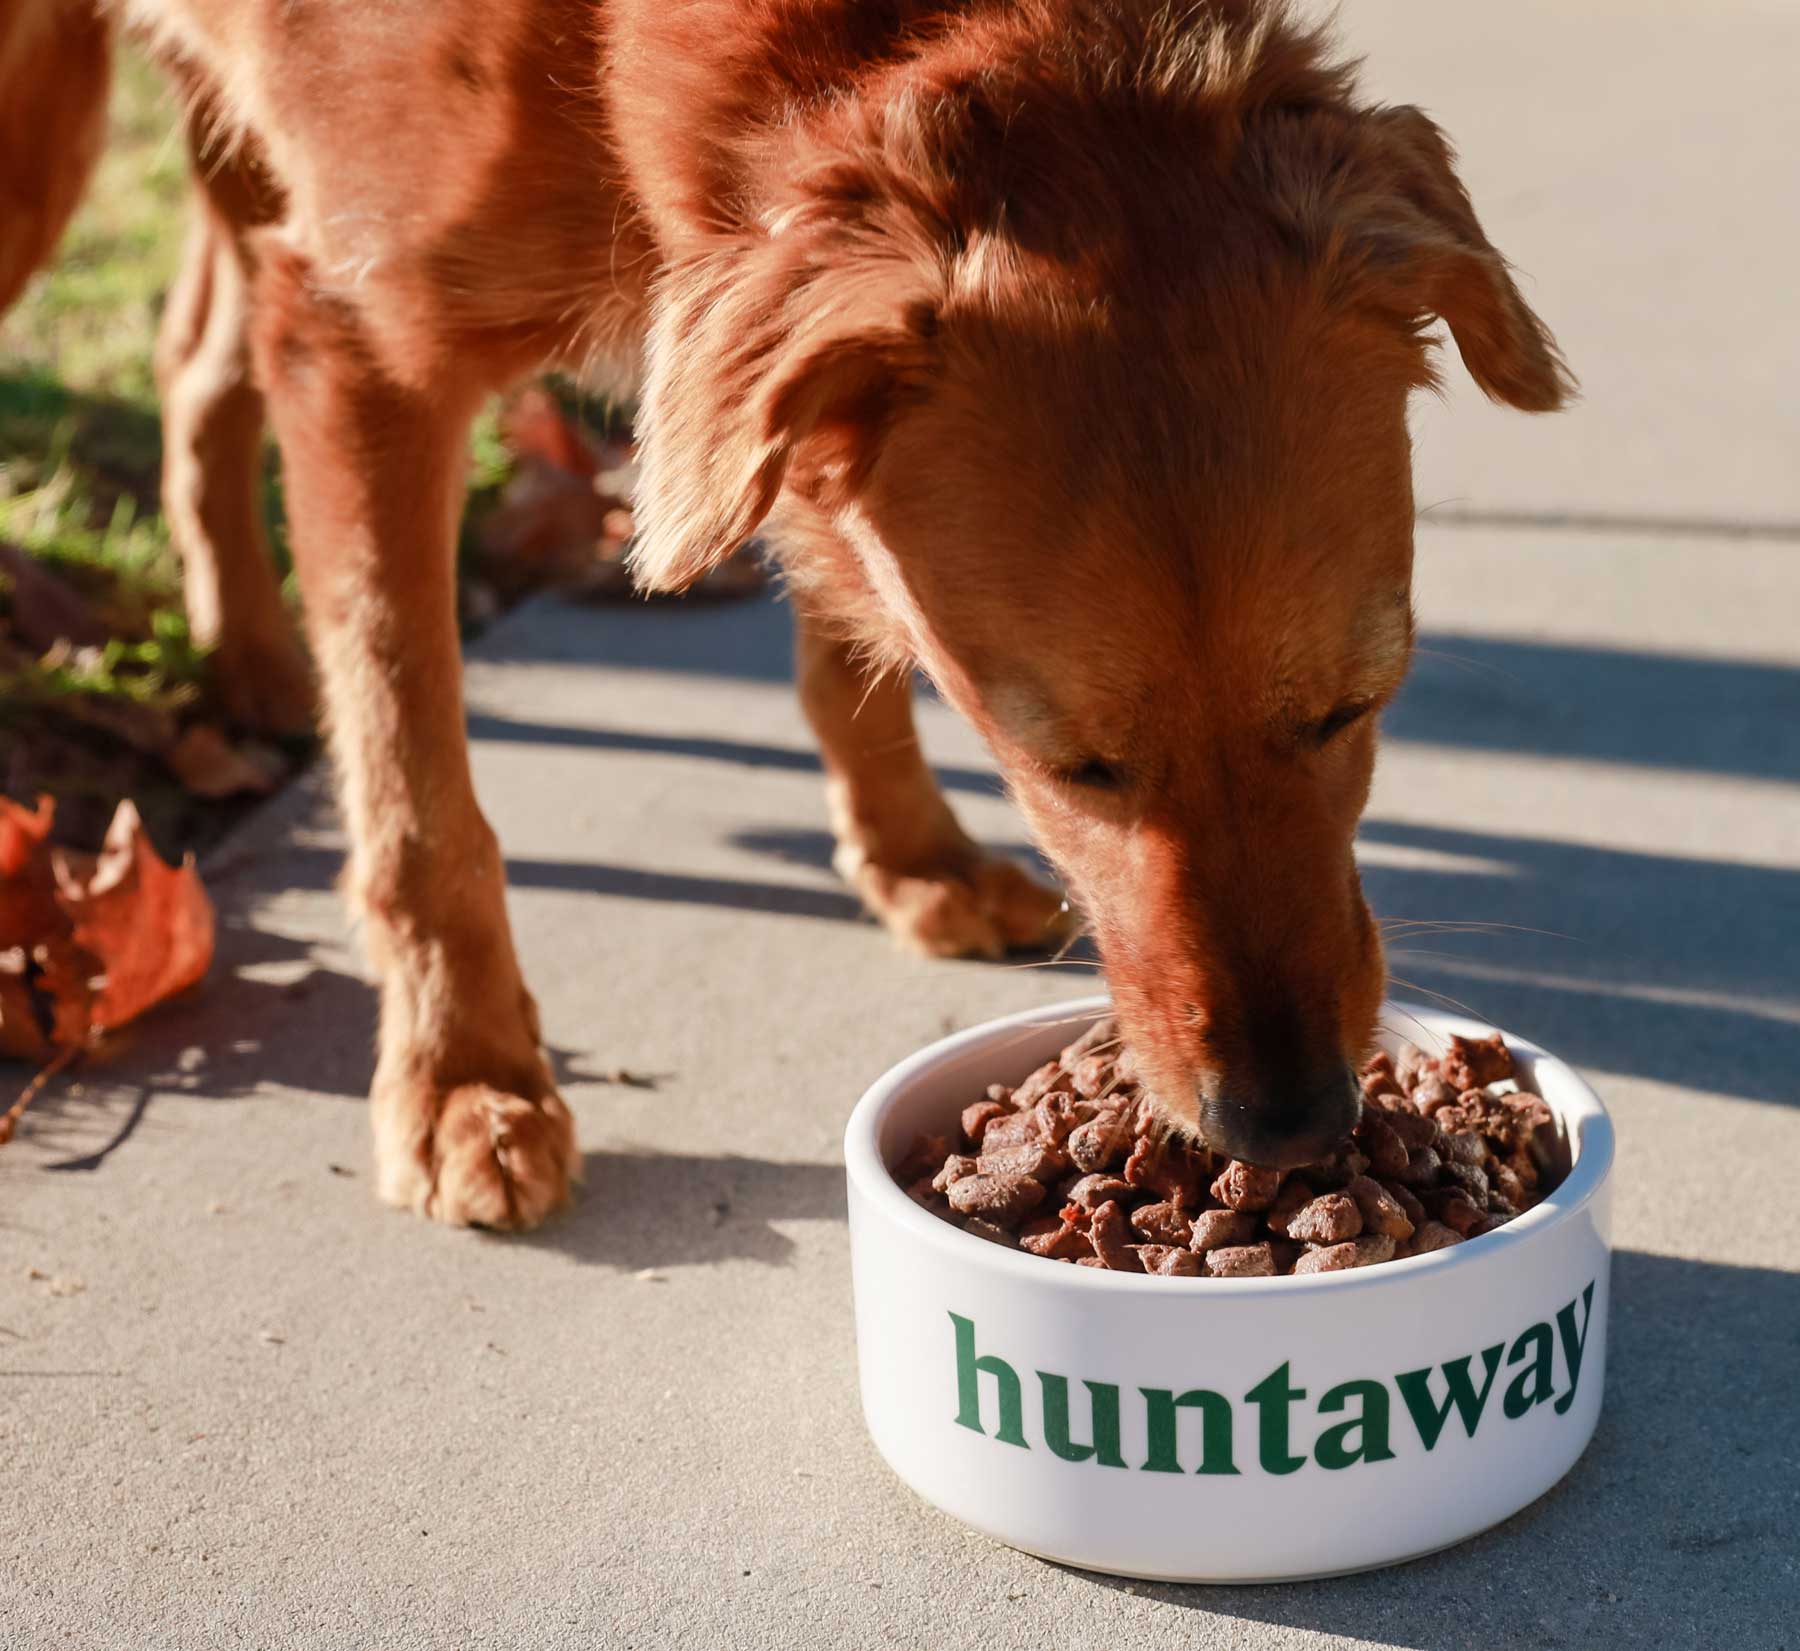 Huntaway Freeze-Dried Raw Venison Dog Food